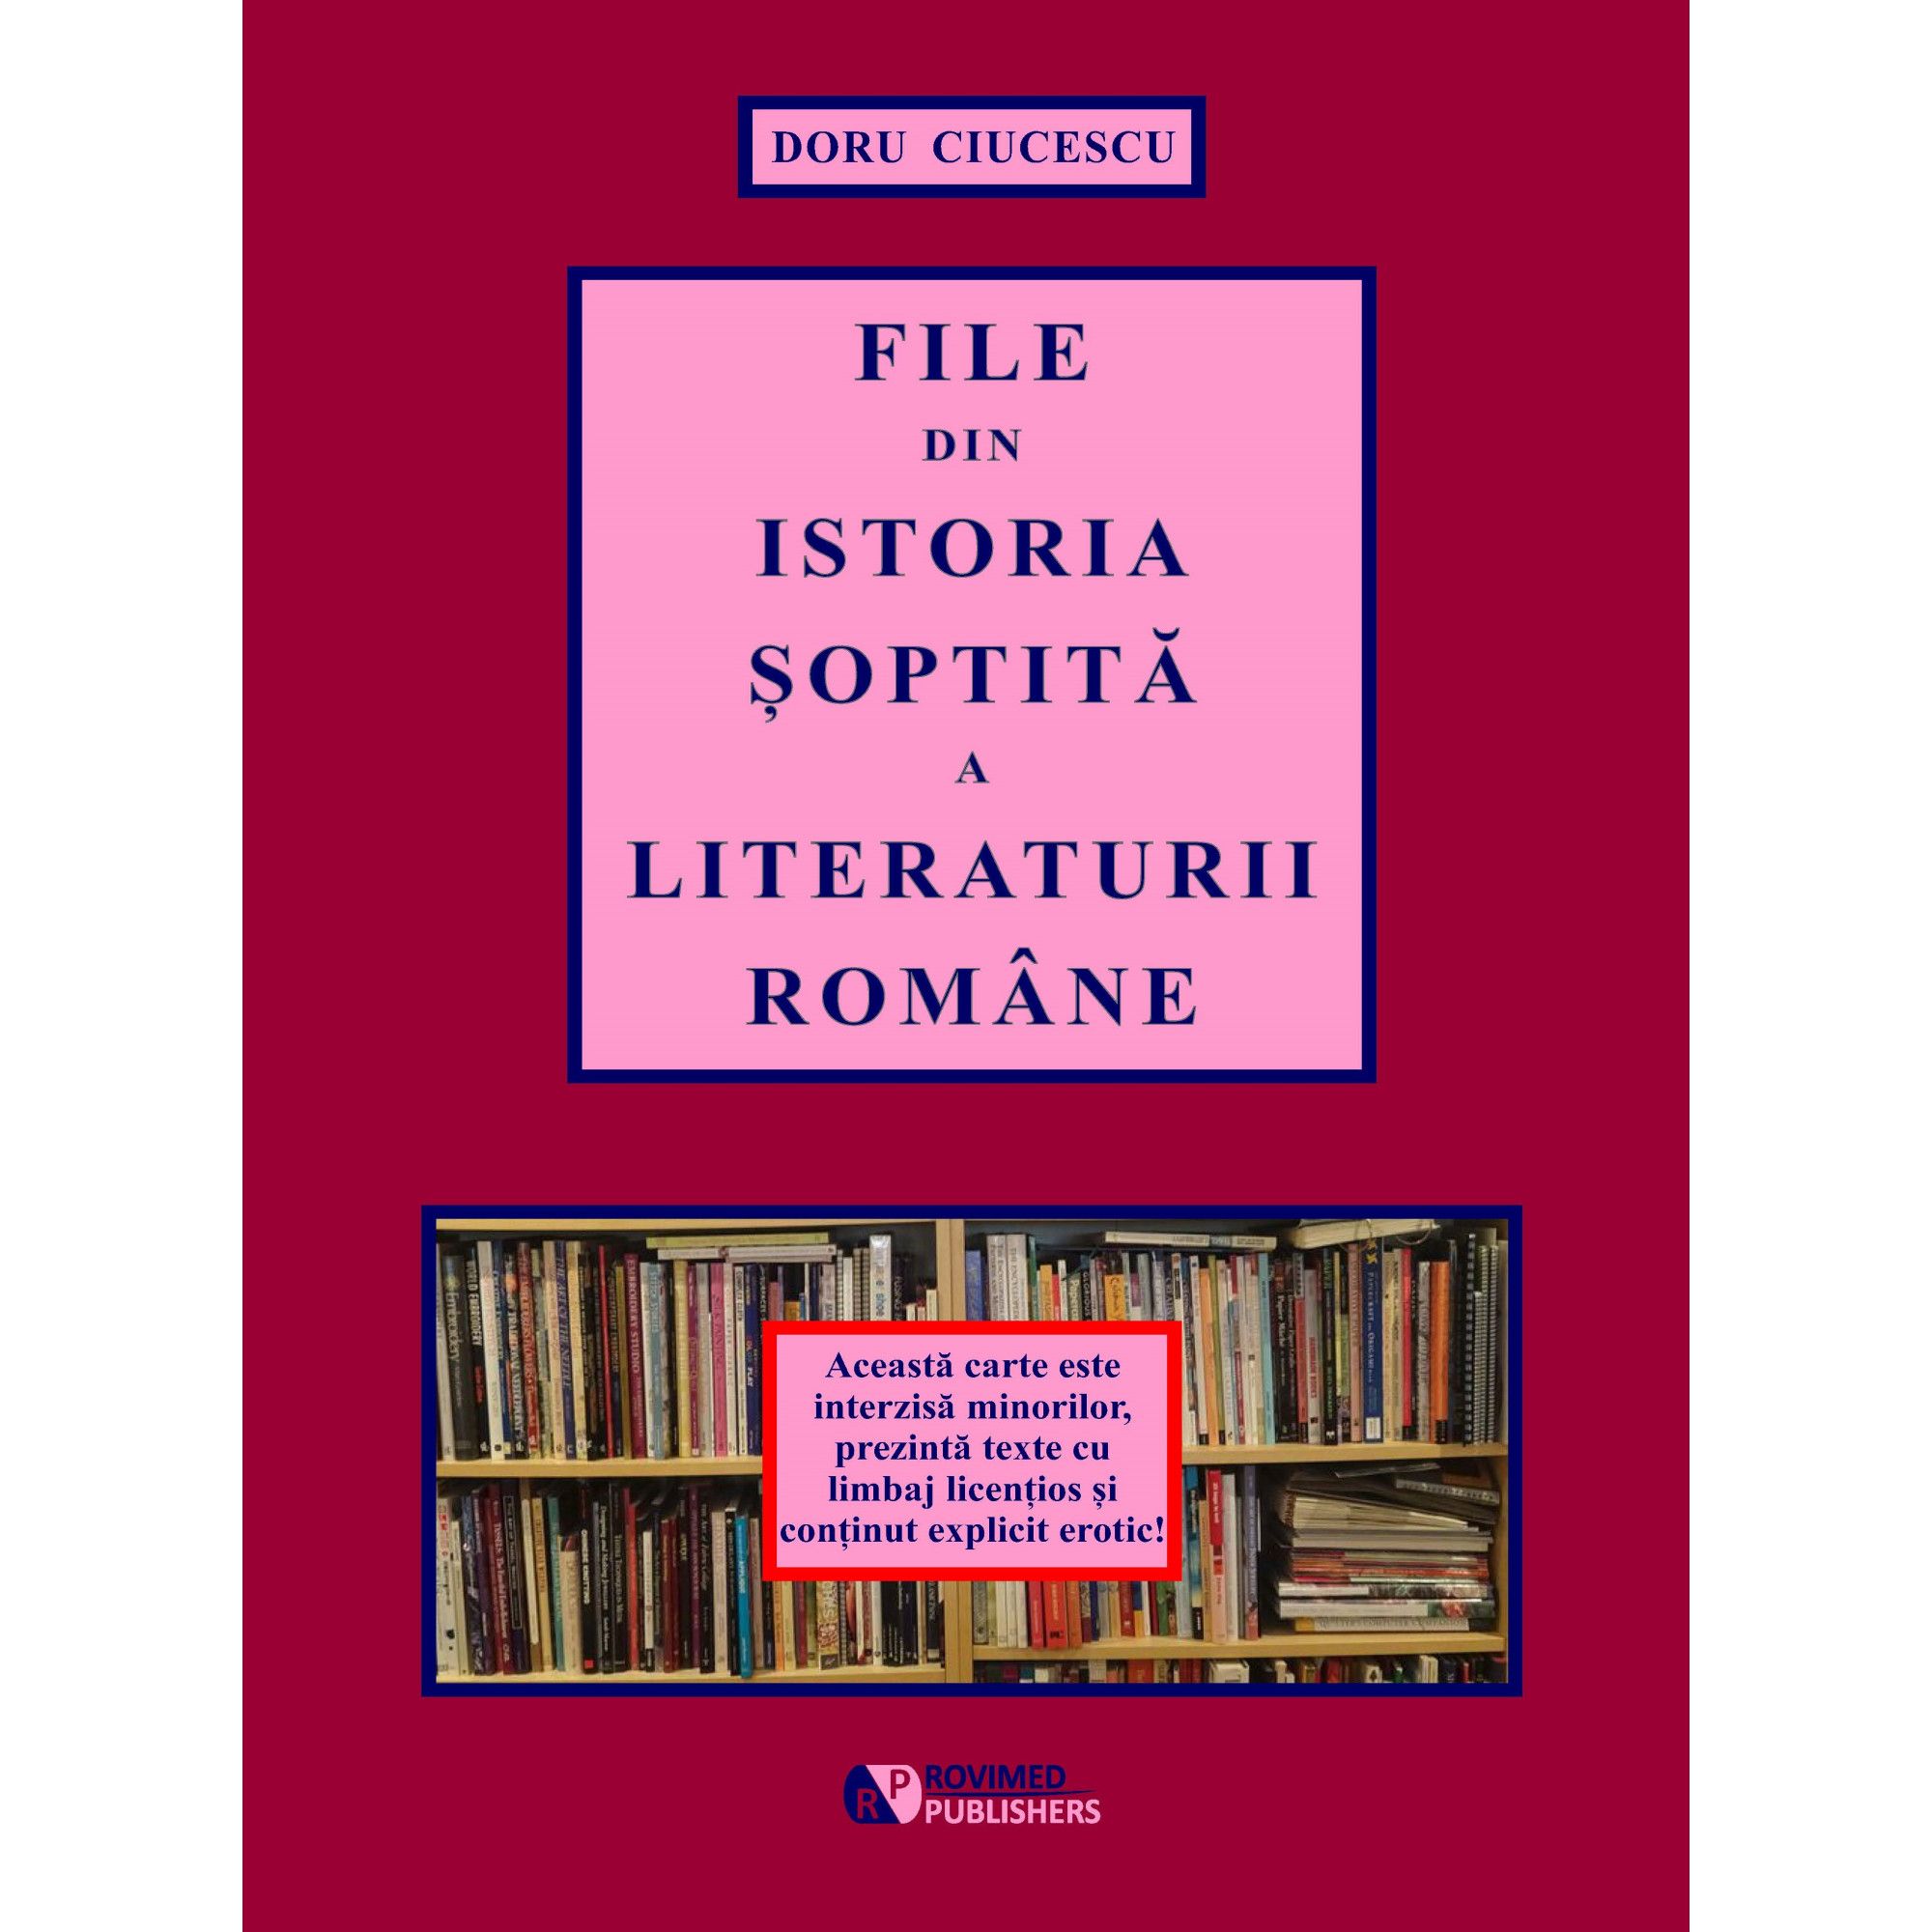 File din istoria soptita a literaturii romane | Doru Ciucescu carturesti 2022